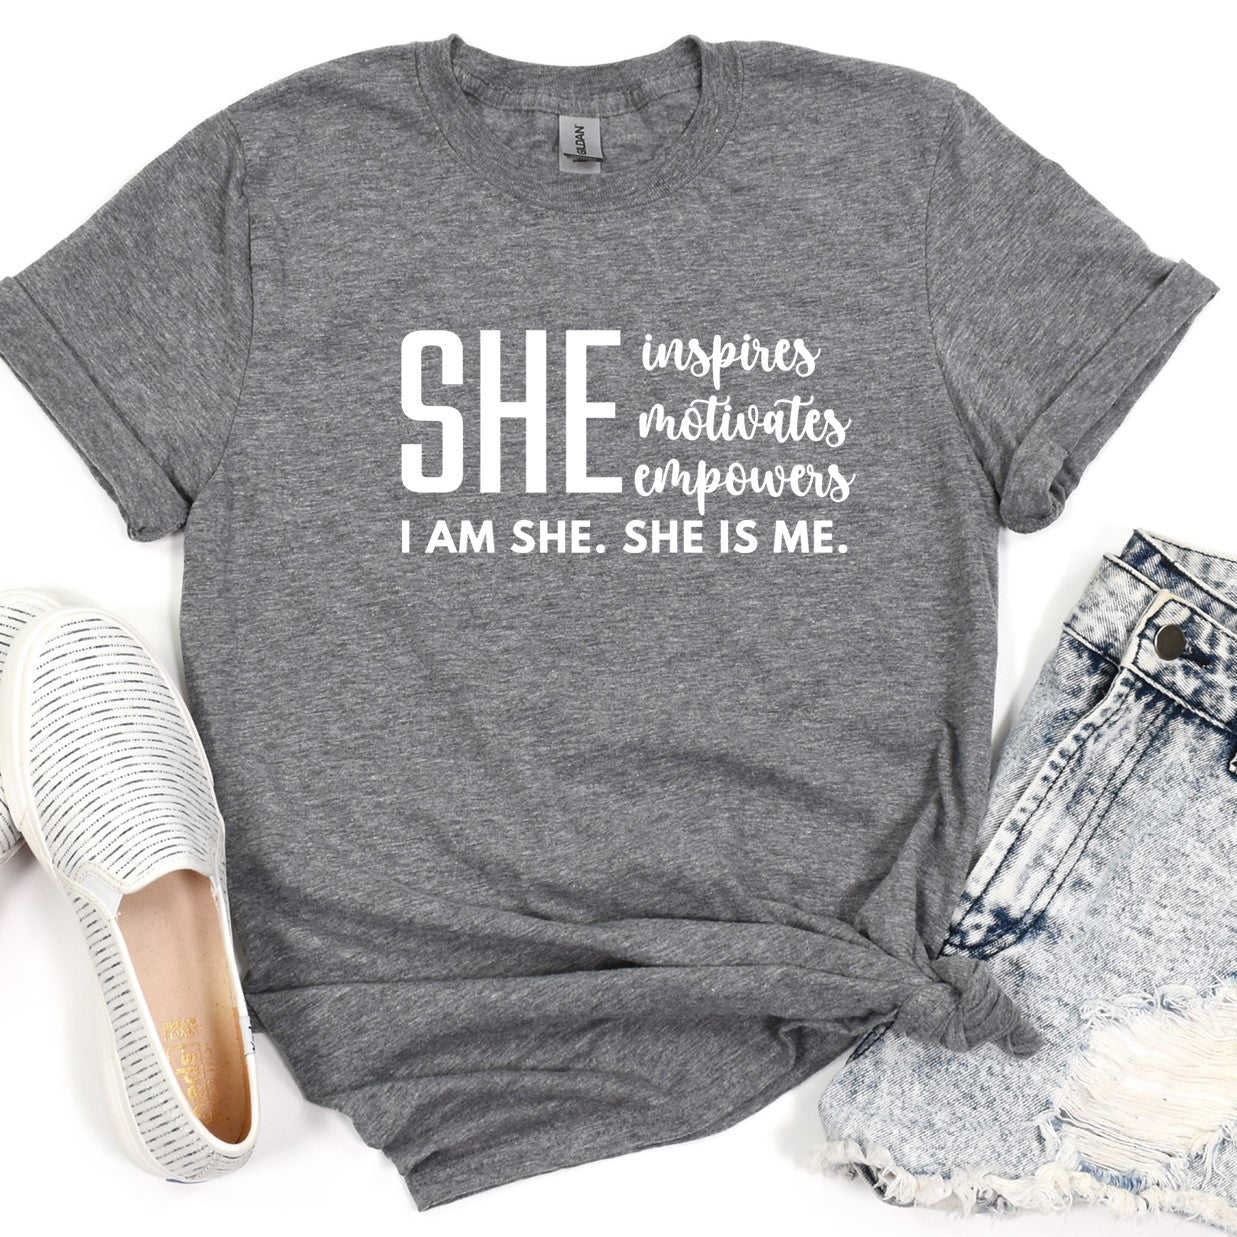 I am She.  She is me.  - Adult Unisex Softstyle T-shirt